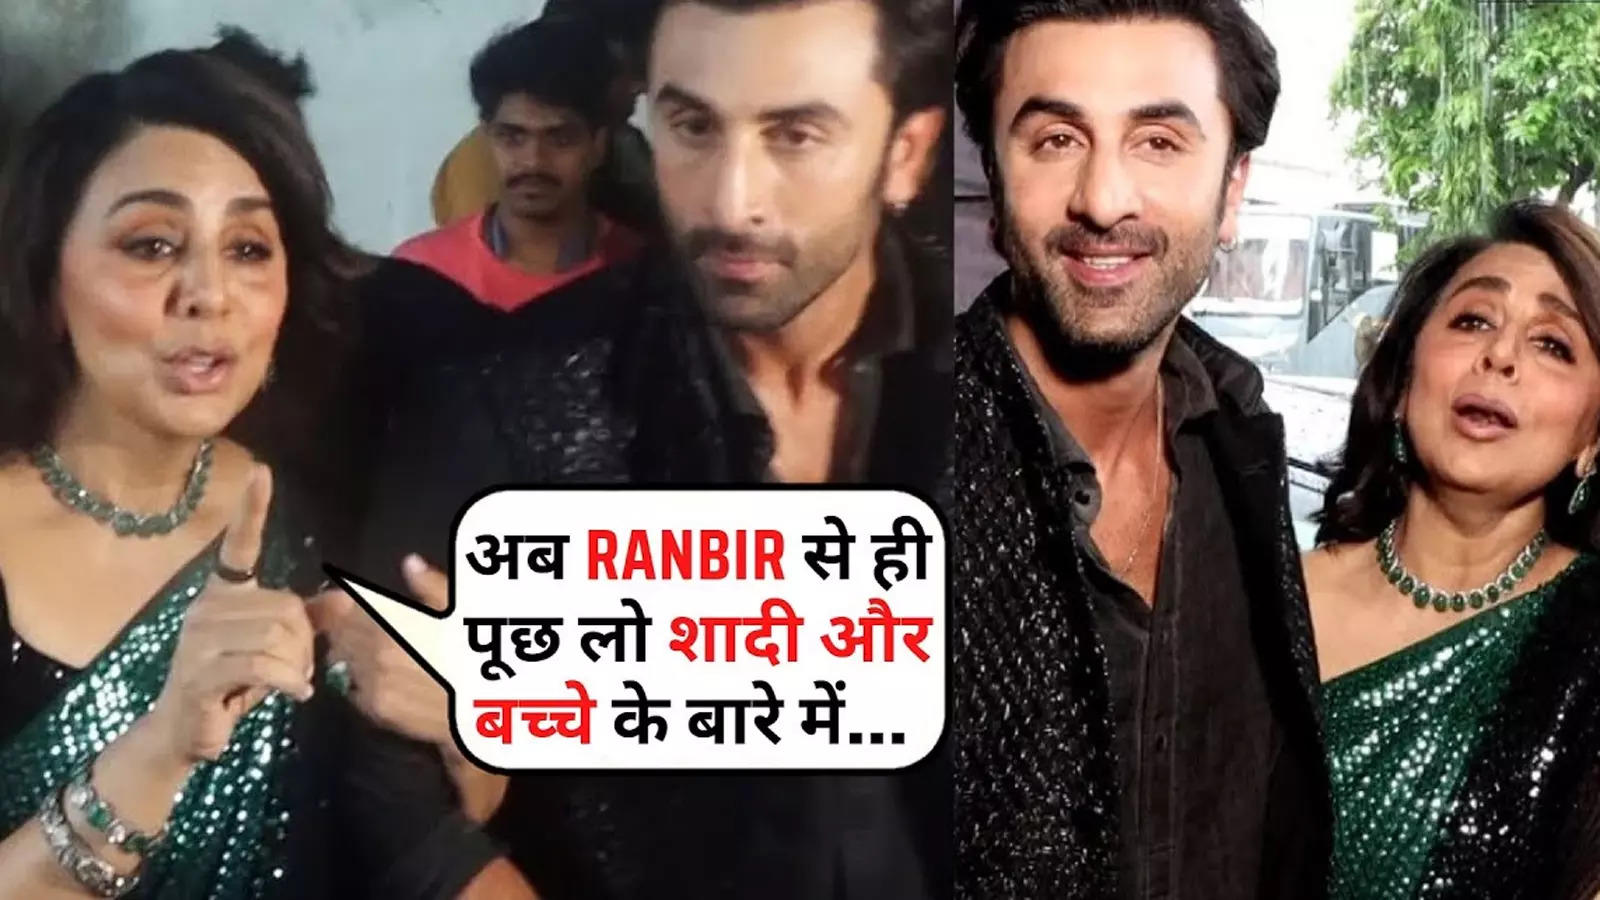 Ranbir Kapoor and Neetu Kapoor spotted in Mumbai: "Ab shaadi aur bachche ke baare mein…."